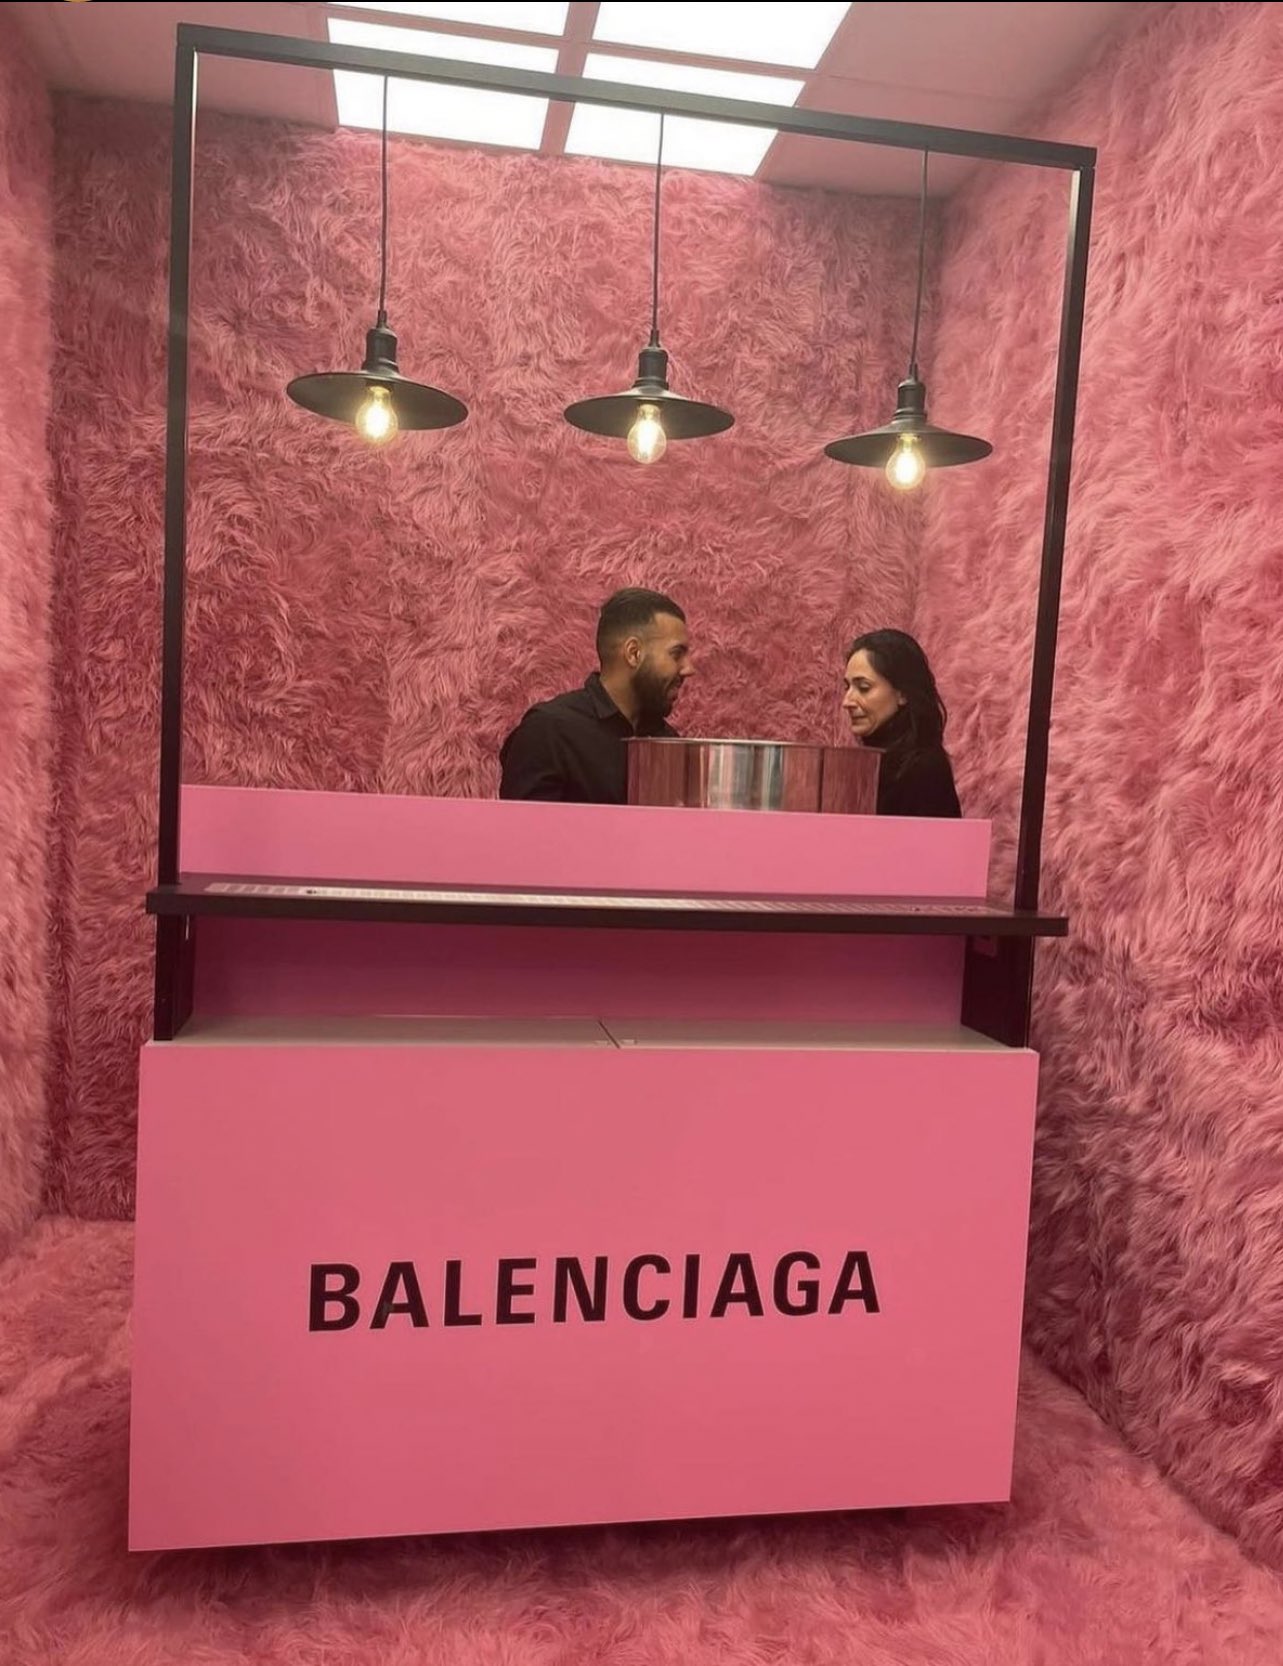 London: Balenciaga pop-up store